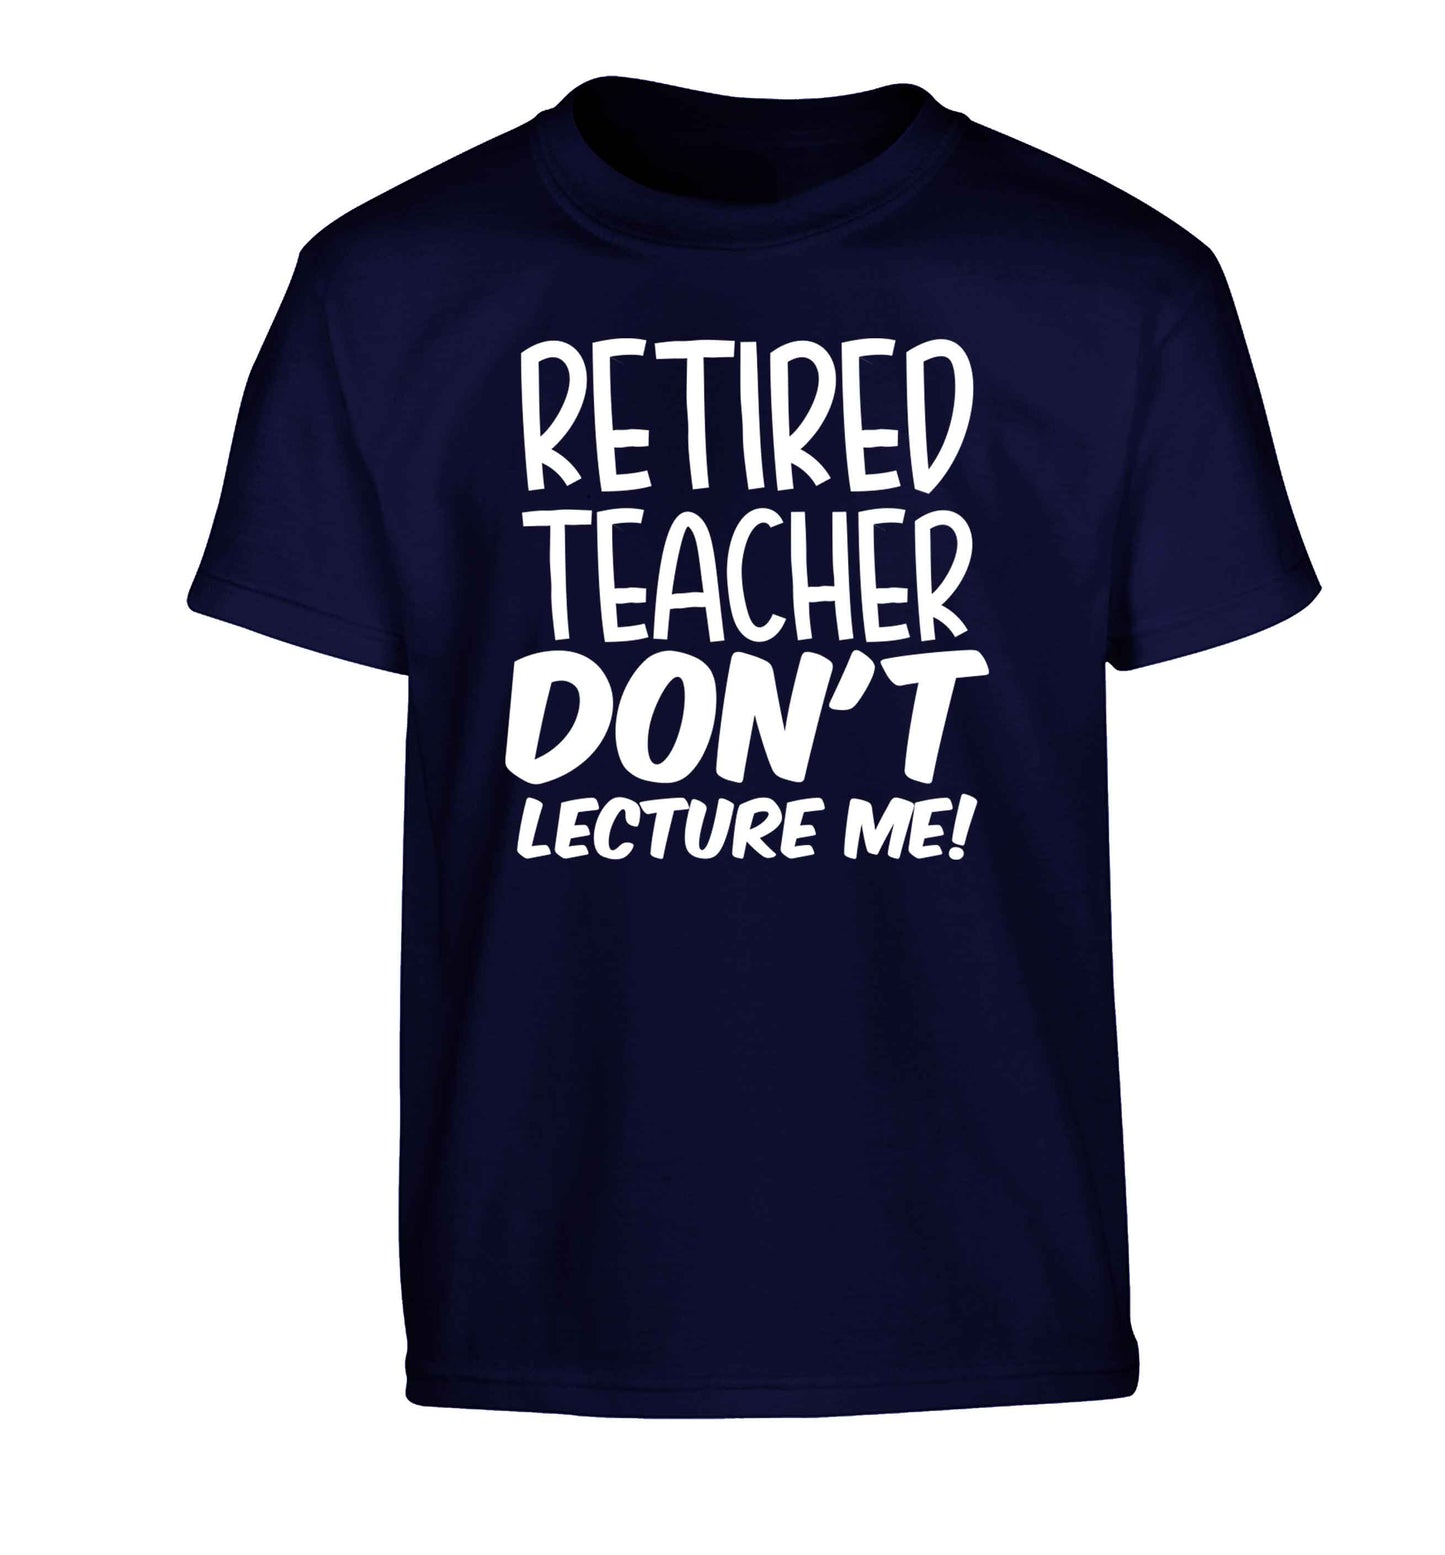 Retired teacher don't lecture me! Children's navy Tshirt 12-13 Years